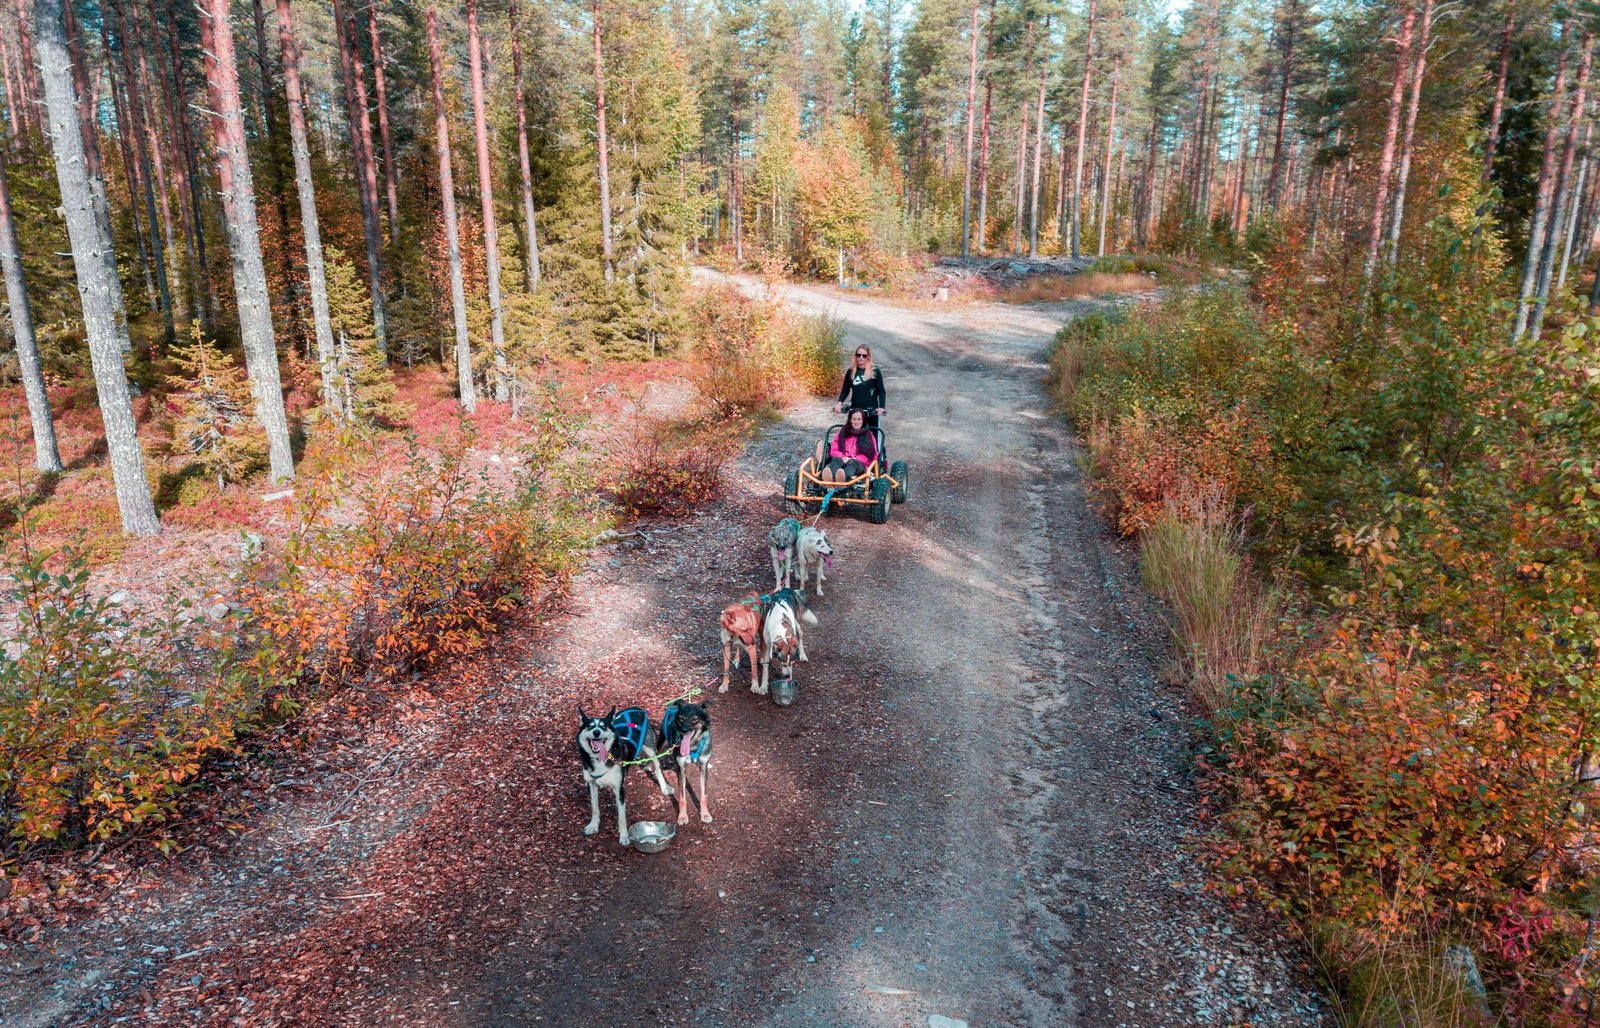 Husky Cart ride in the fall